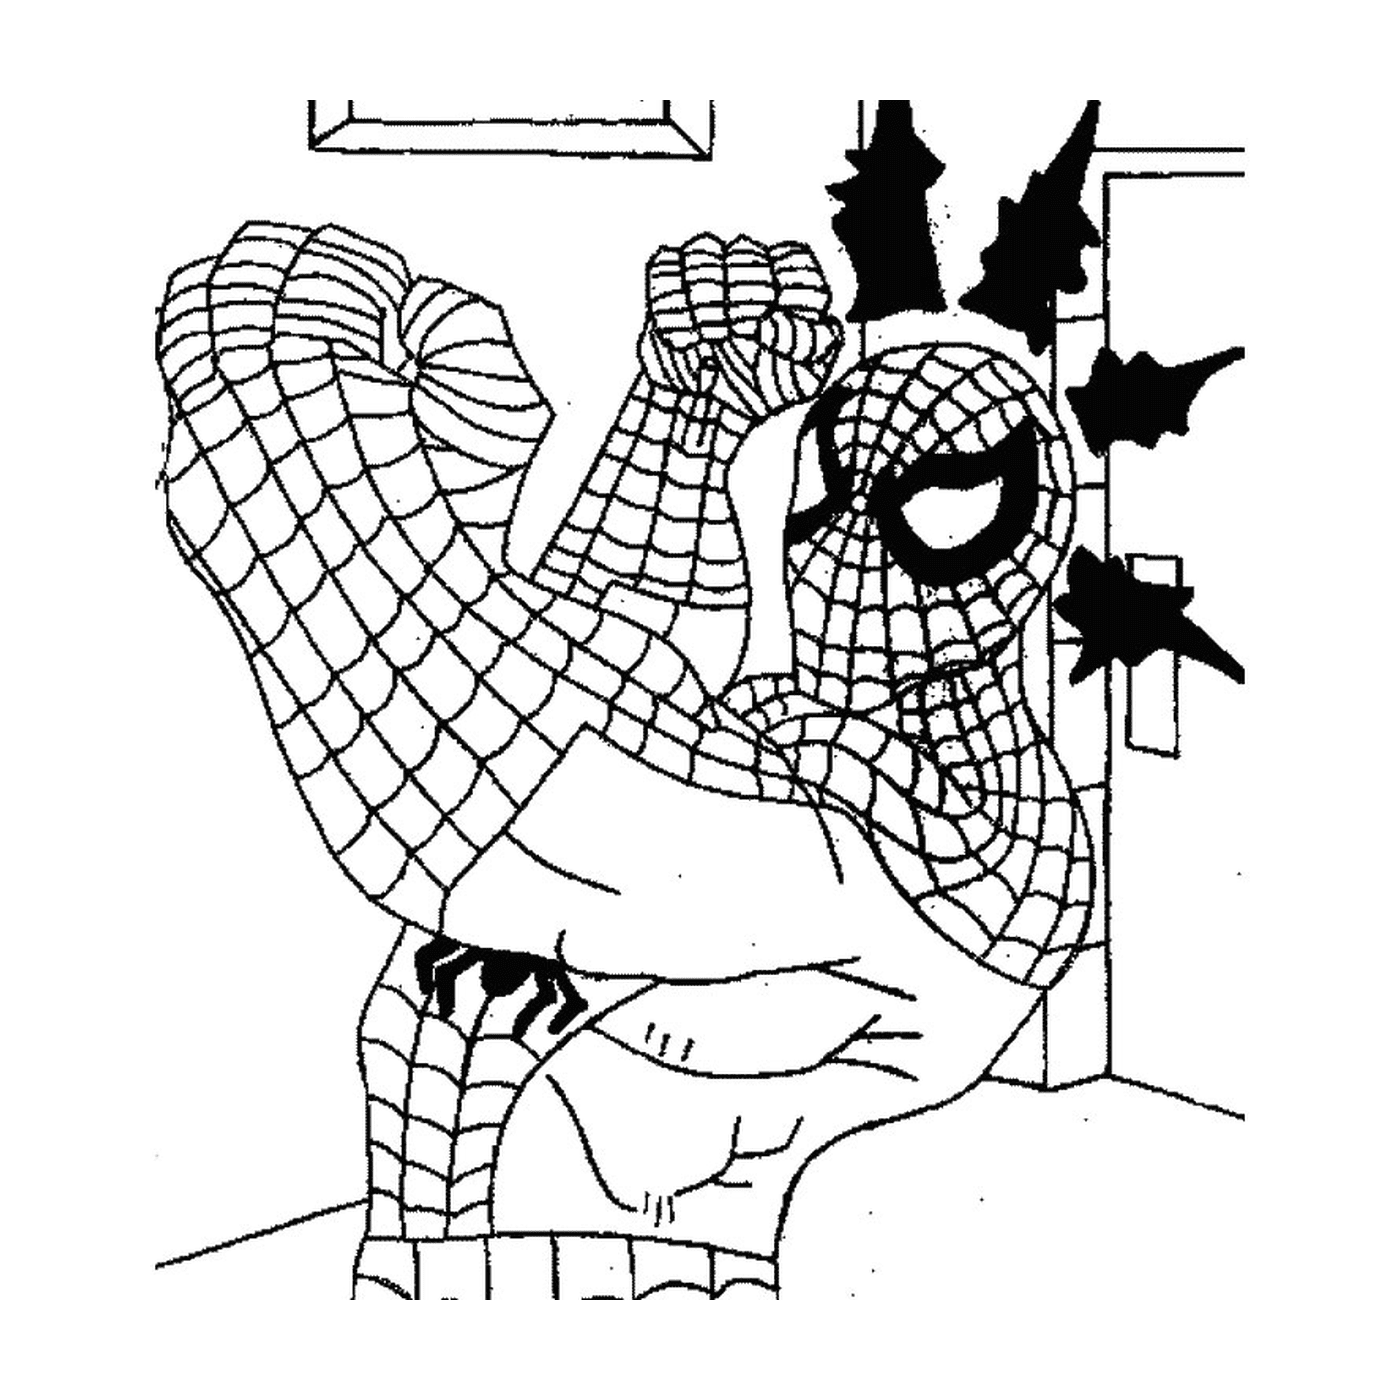 spiderman fait un jab avec sa main droite